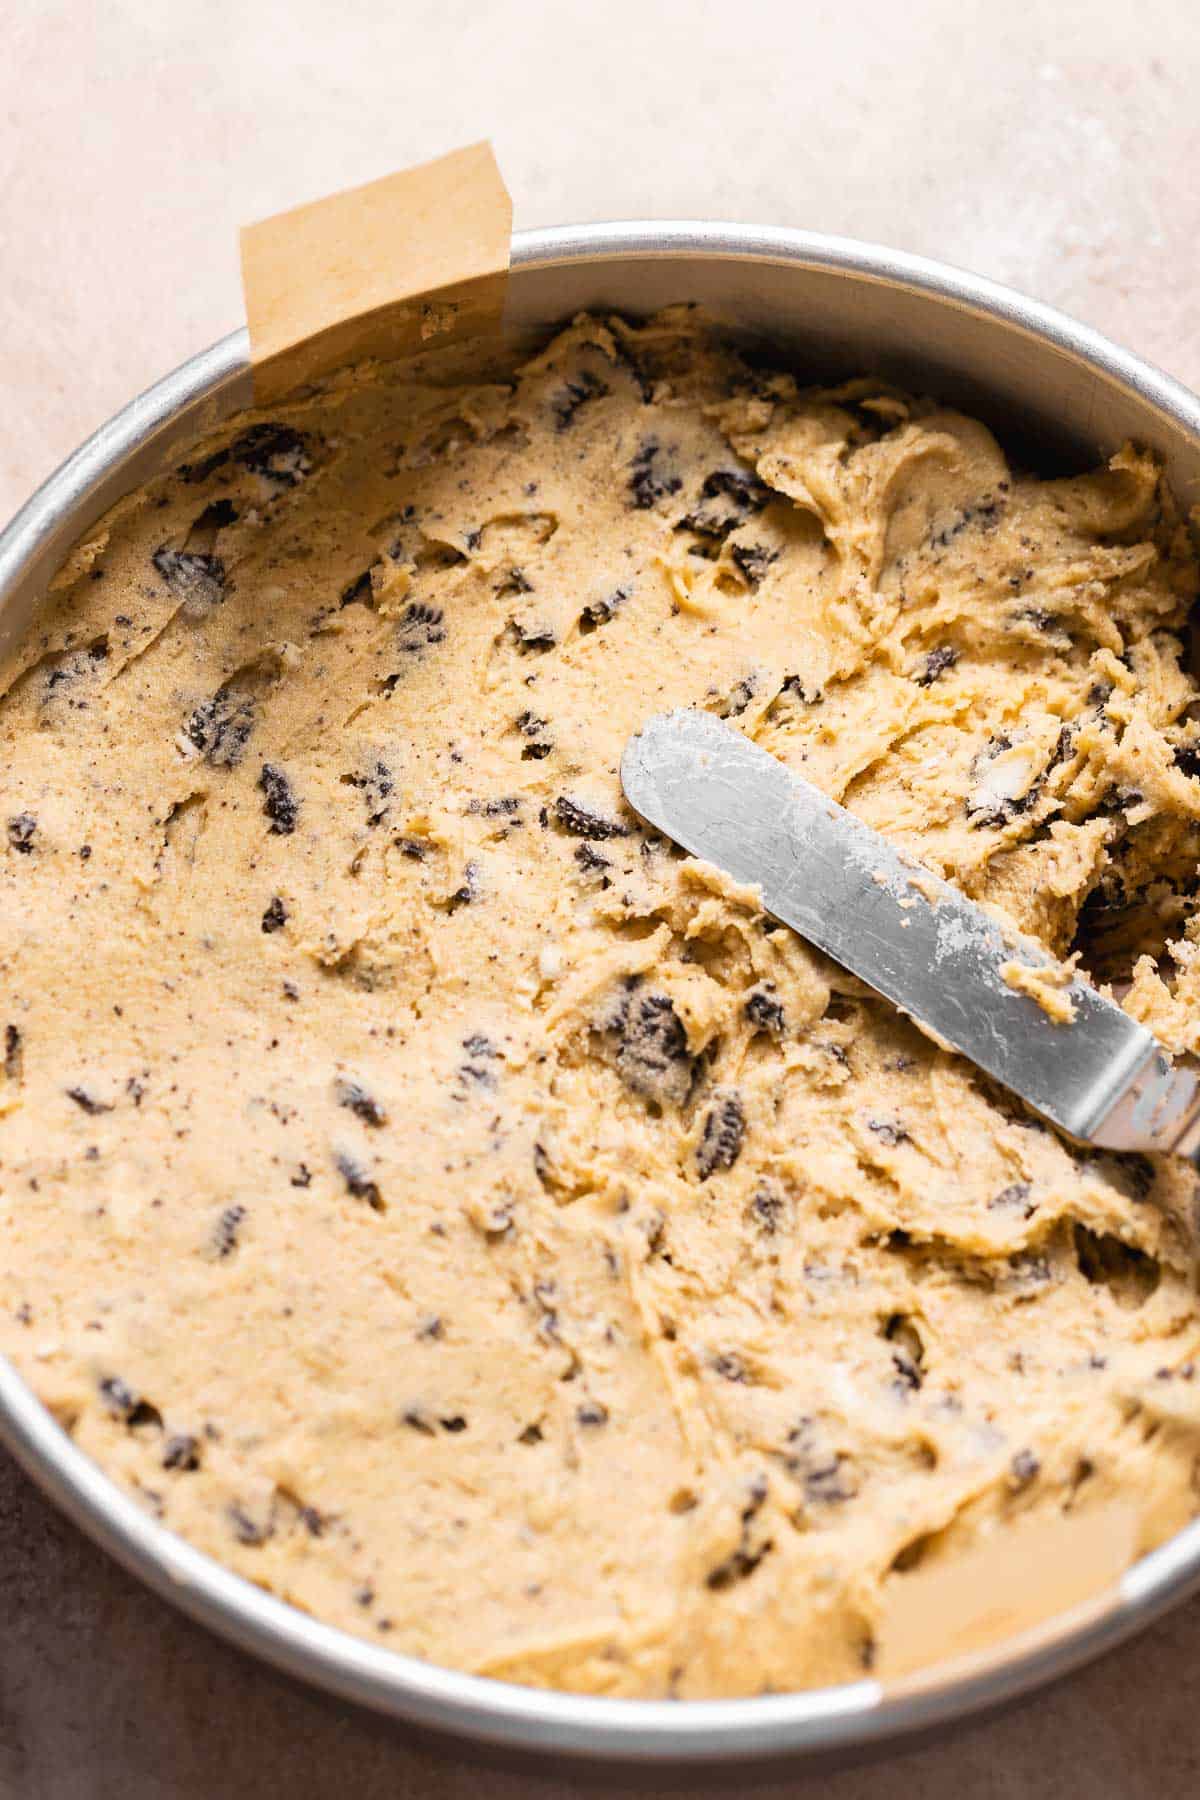 A spatula spreading the oreo cookie dough into the cake pan.